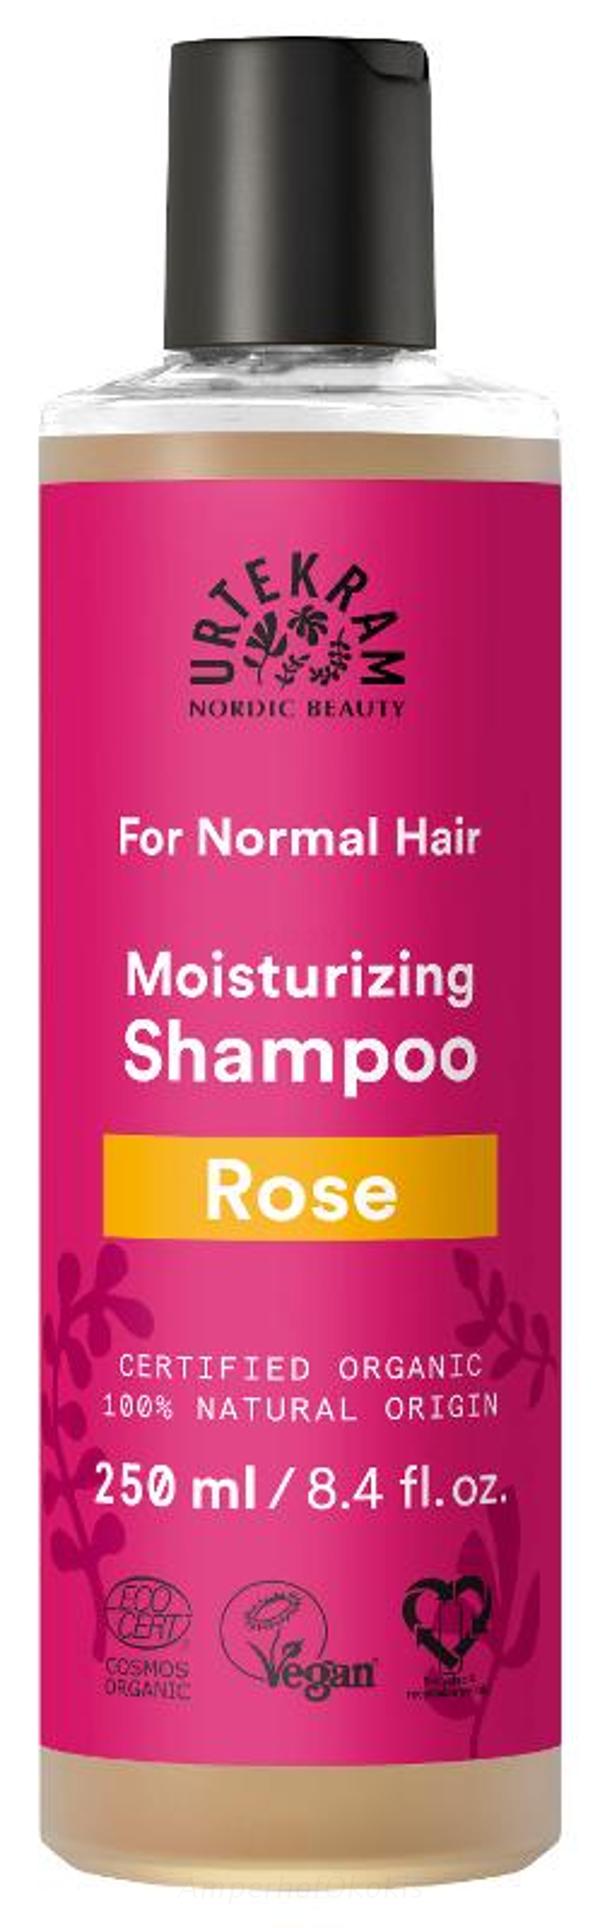 Produktfoto zu Shampoo Rose 250 ml